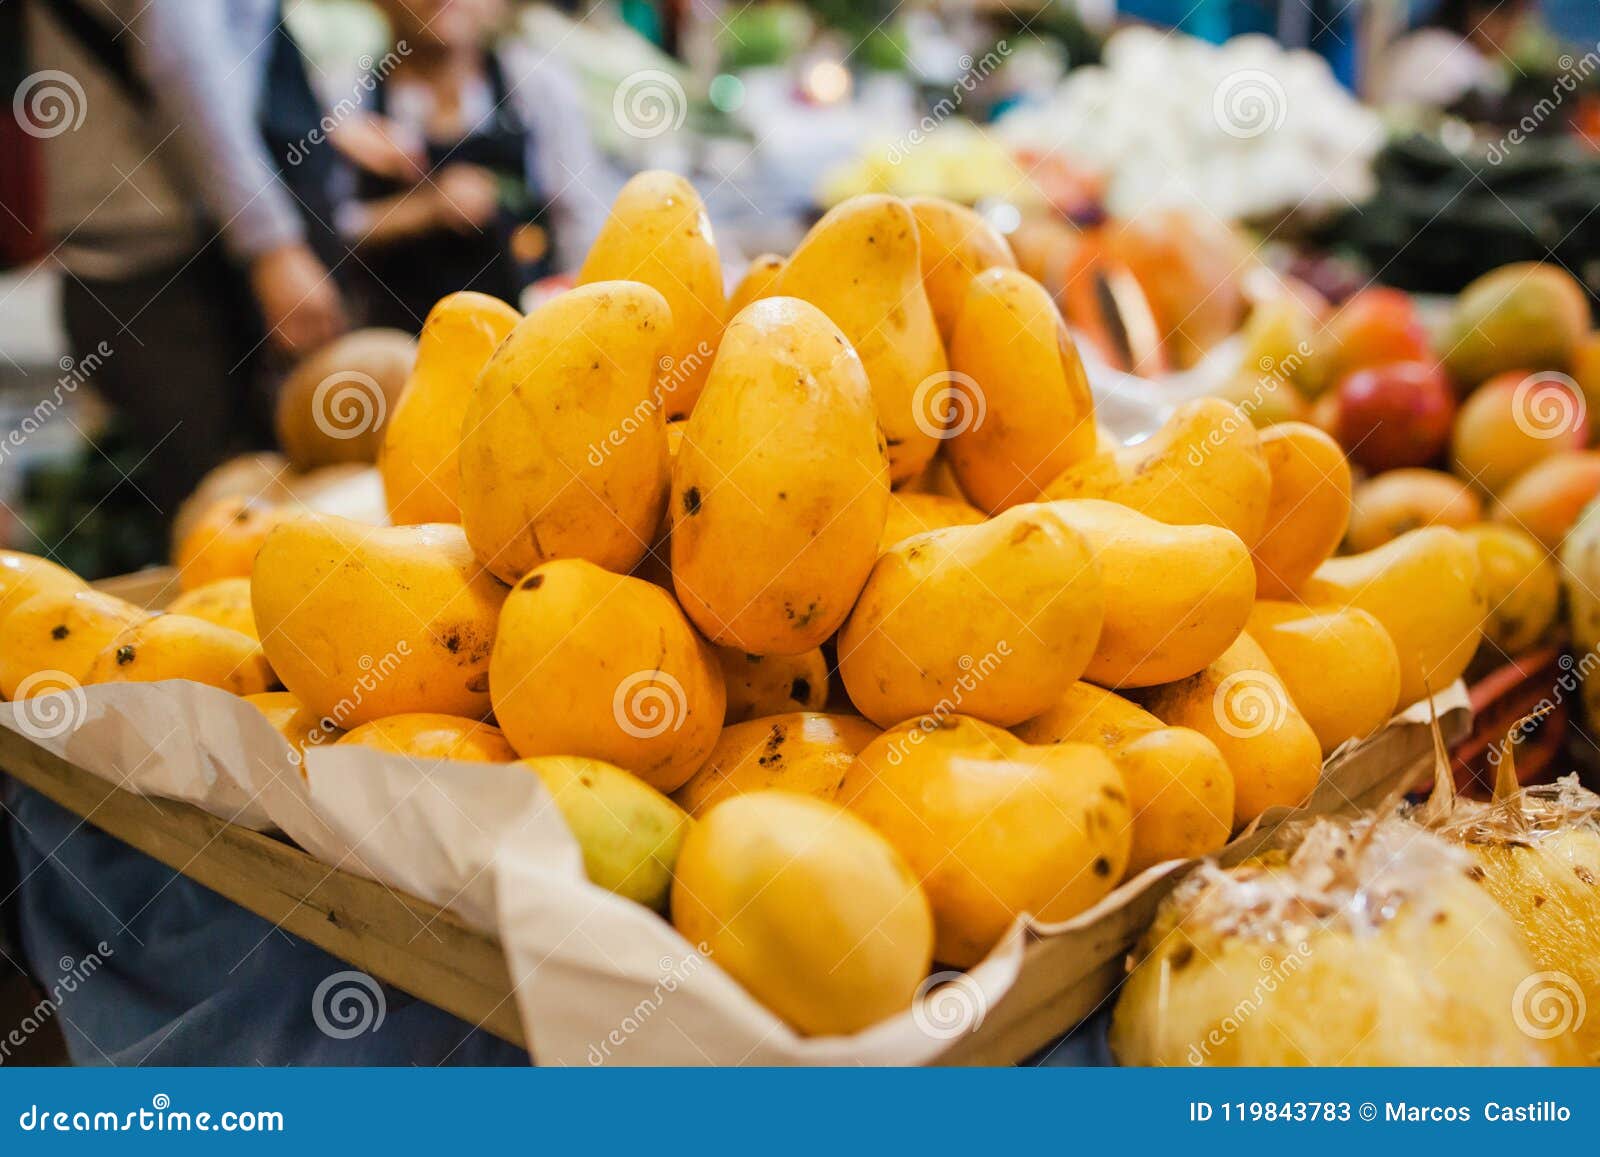 mangos in a mexican market cholula mexico fruit